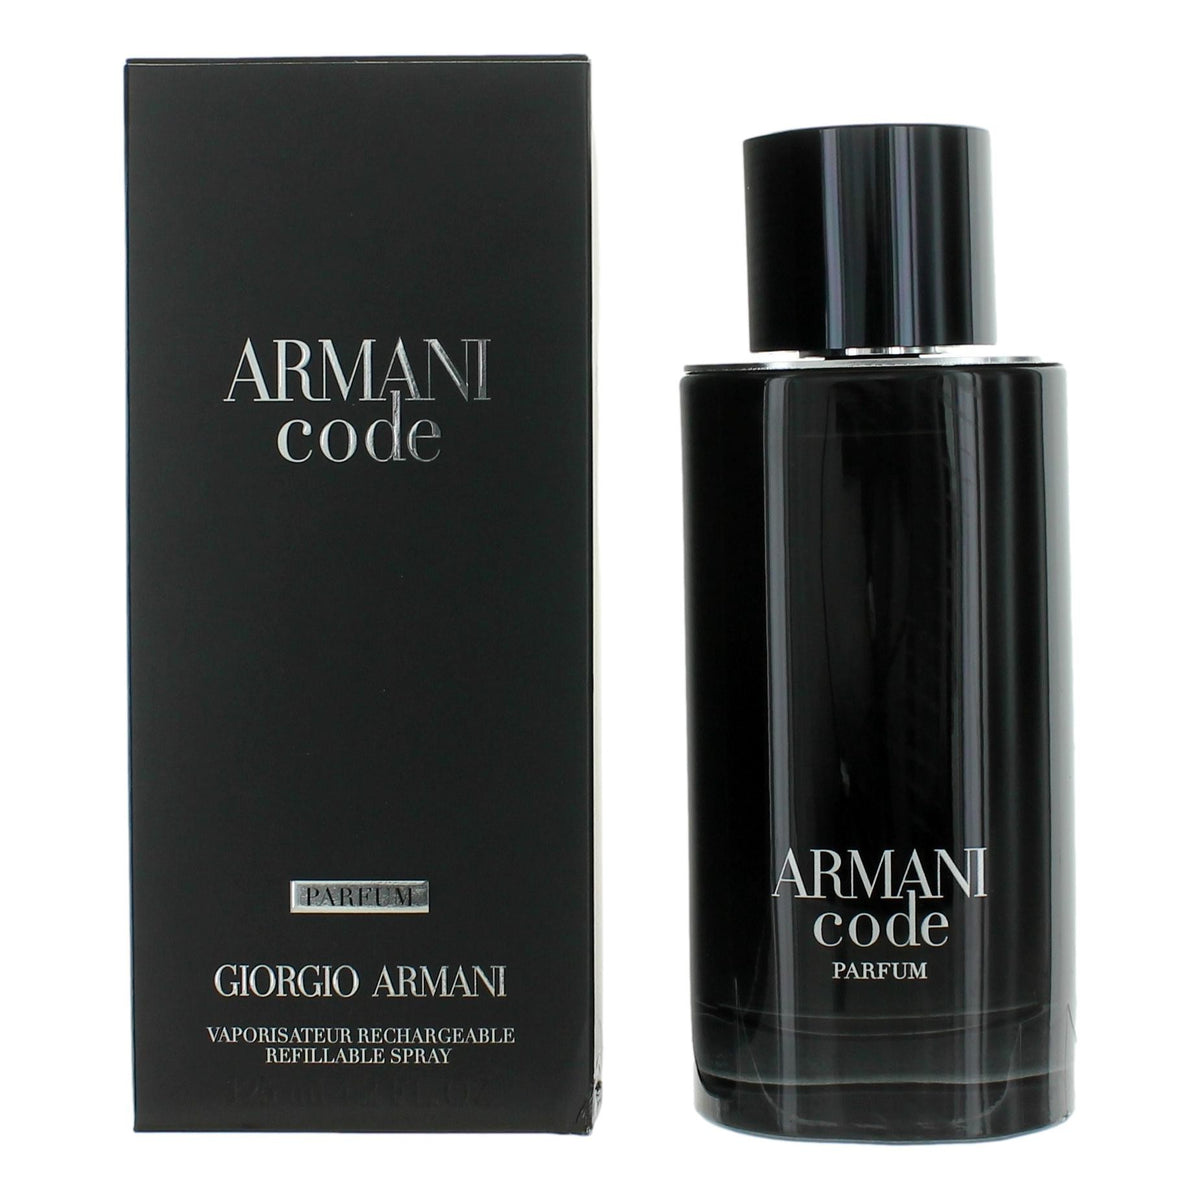 Armani Code by Giorgio Armani, 4.2 oz Parfum Spray for Men